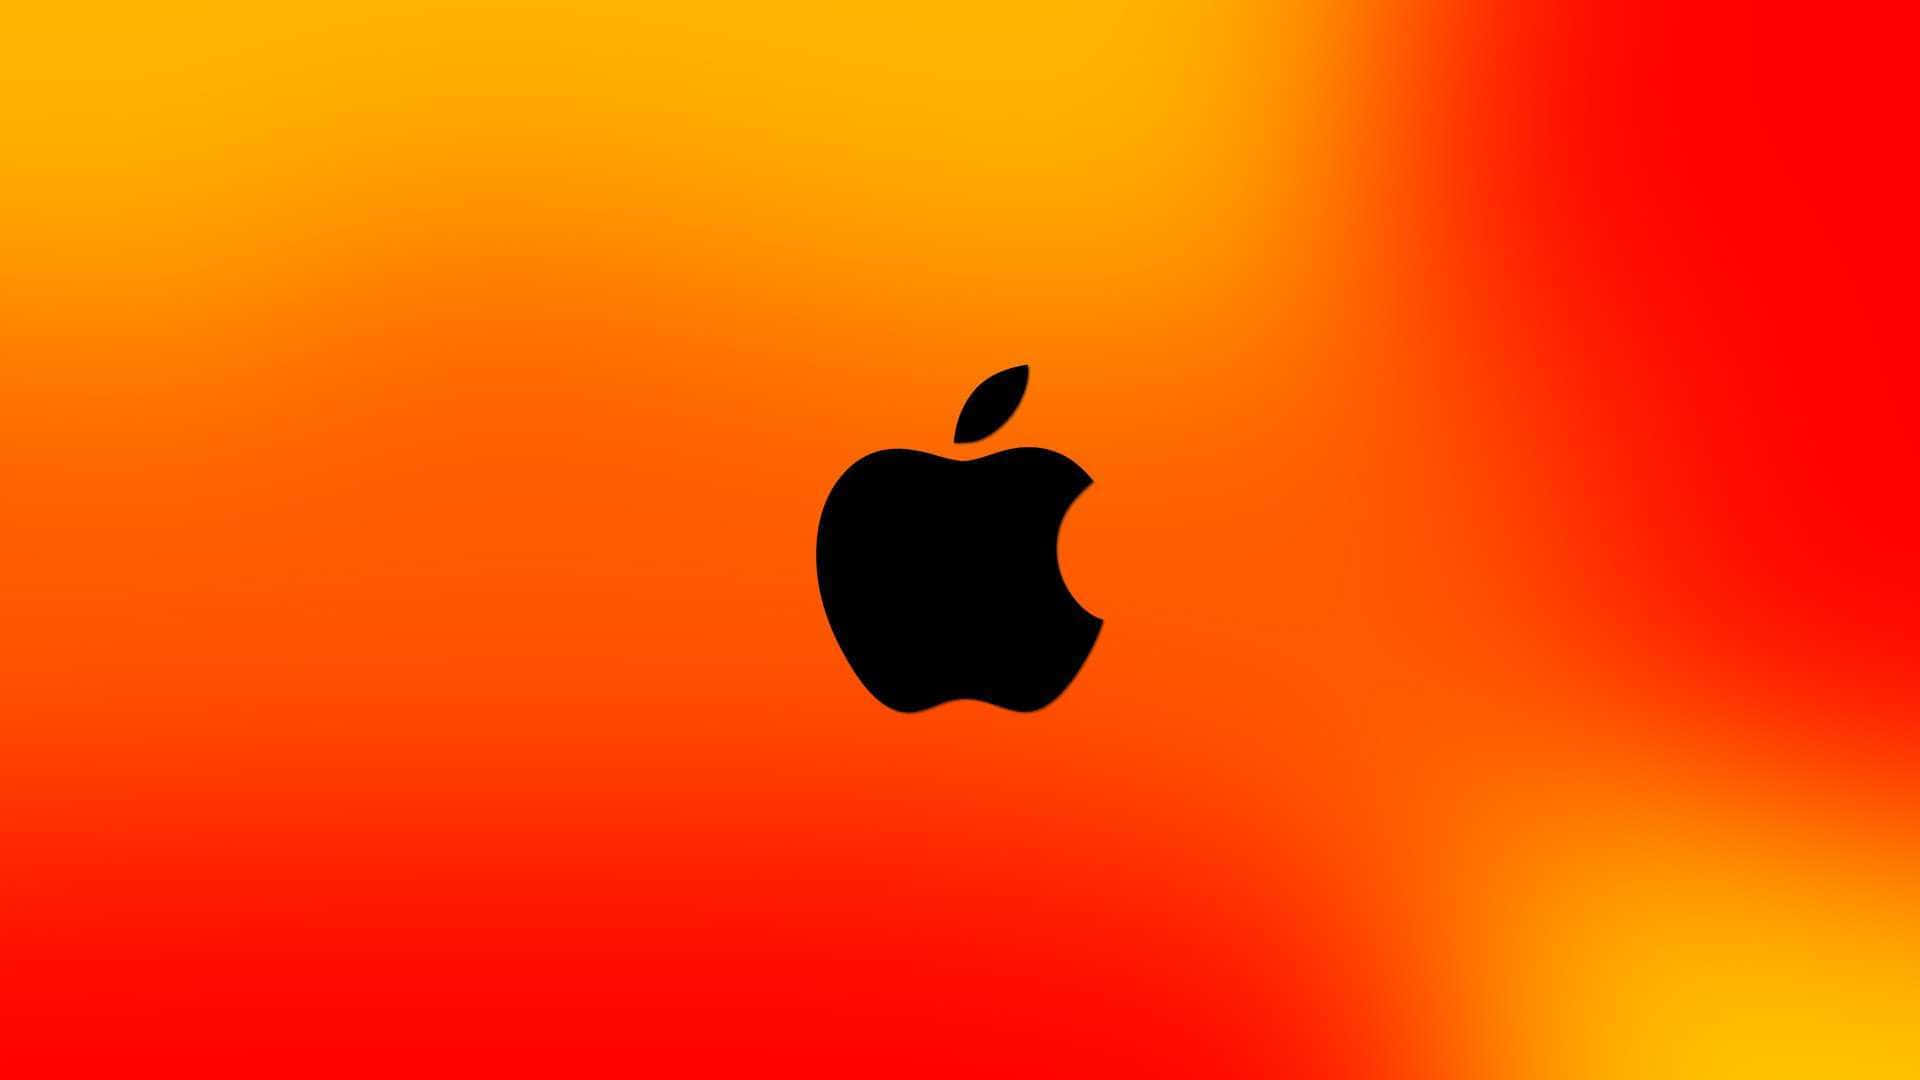 Logode Apple Negro En Degradado Naranja Fondo de pantalla